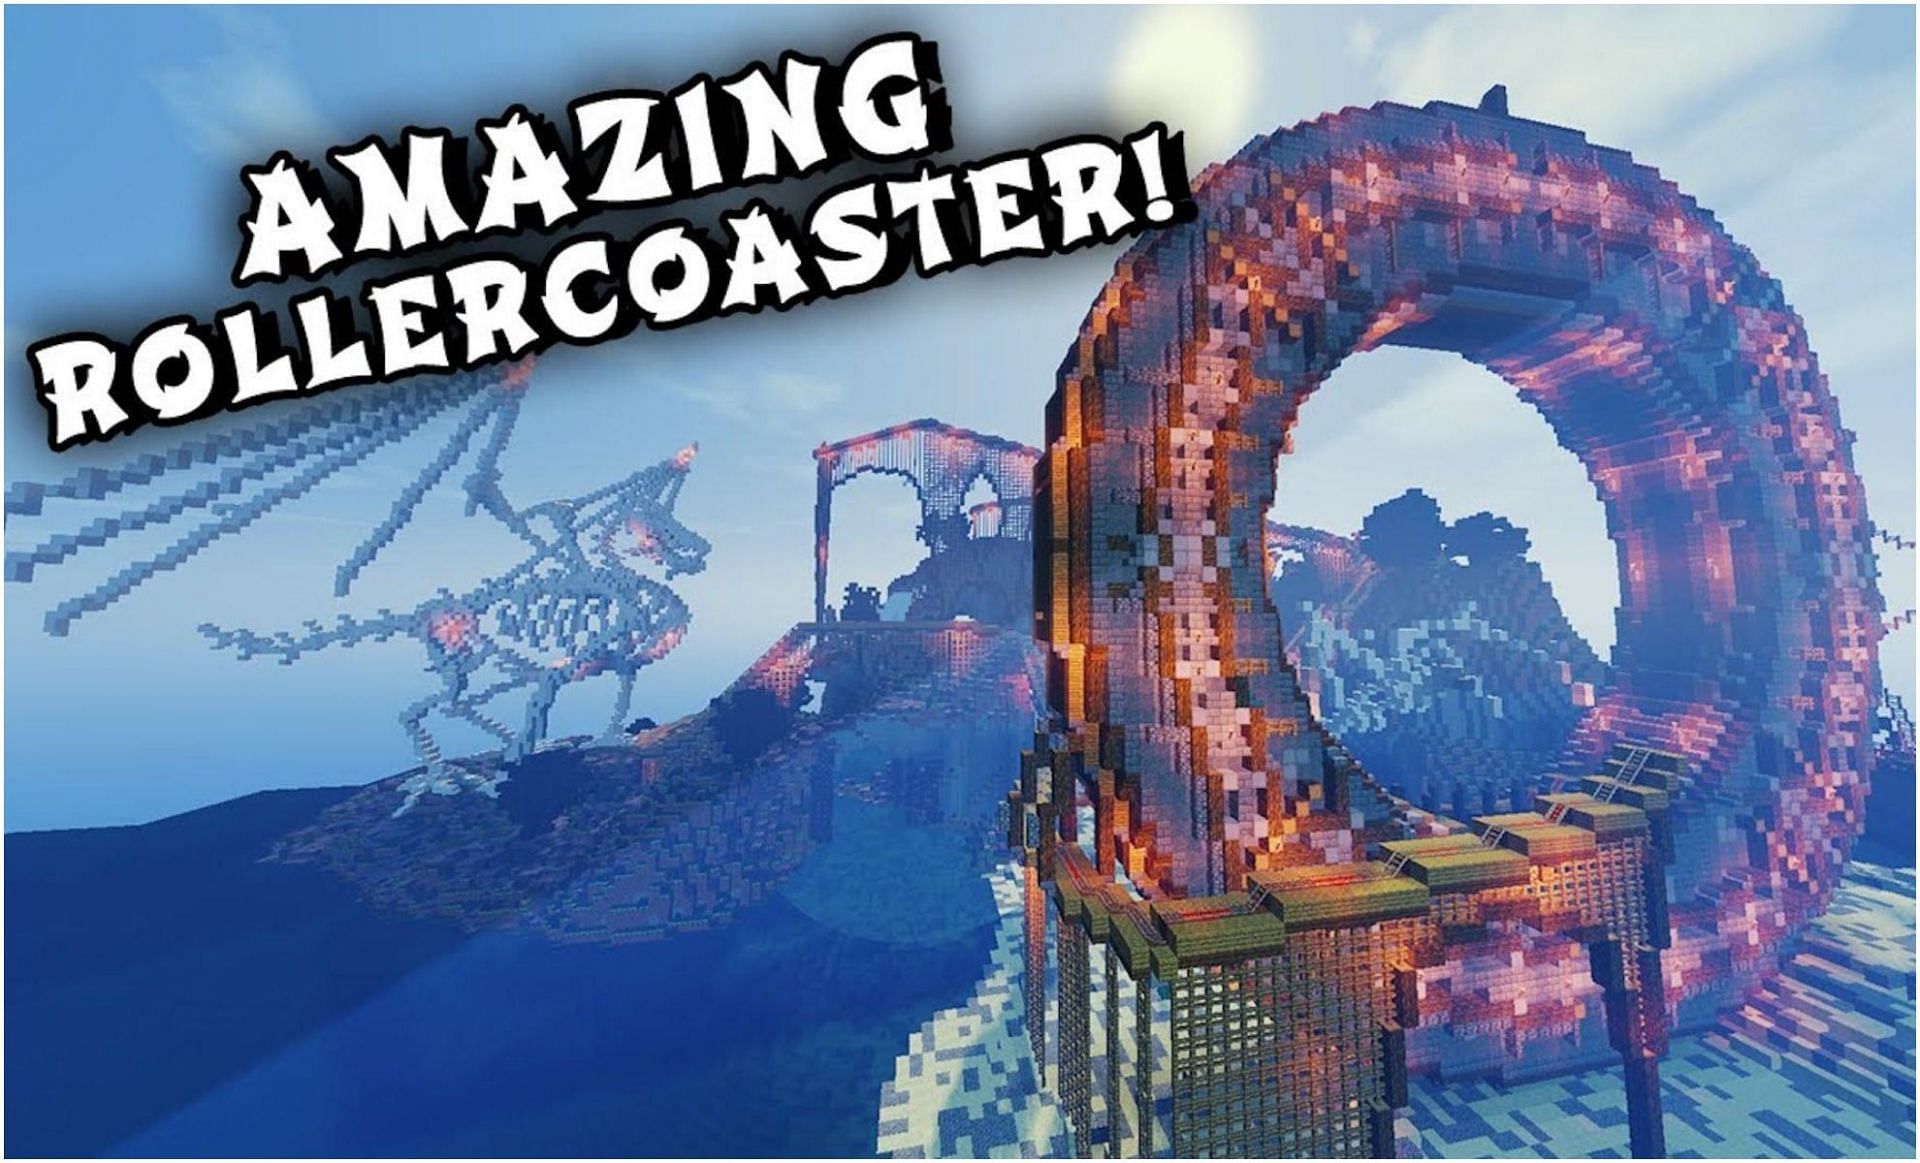 A rollercoaster track in Minecraft (Image via APKPure/Minecraft)